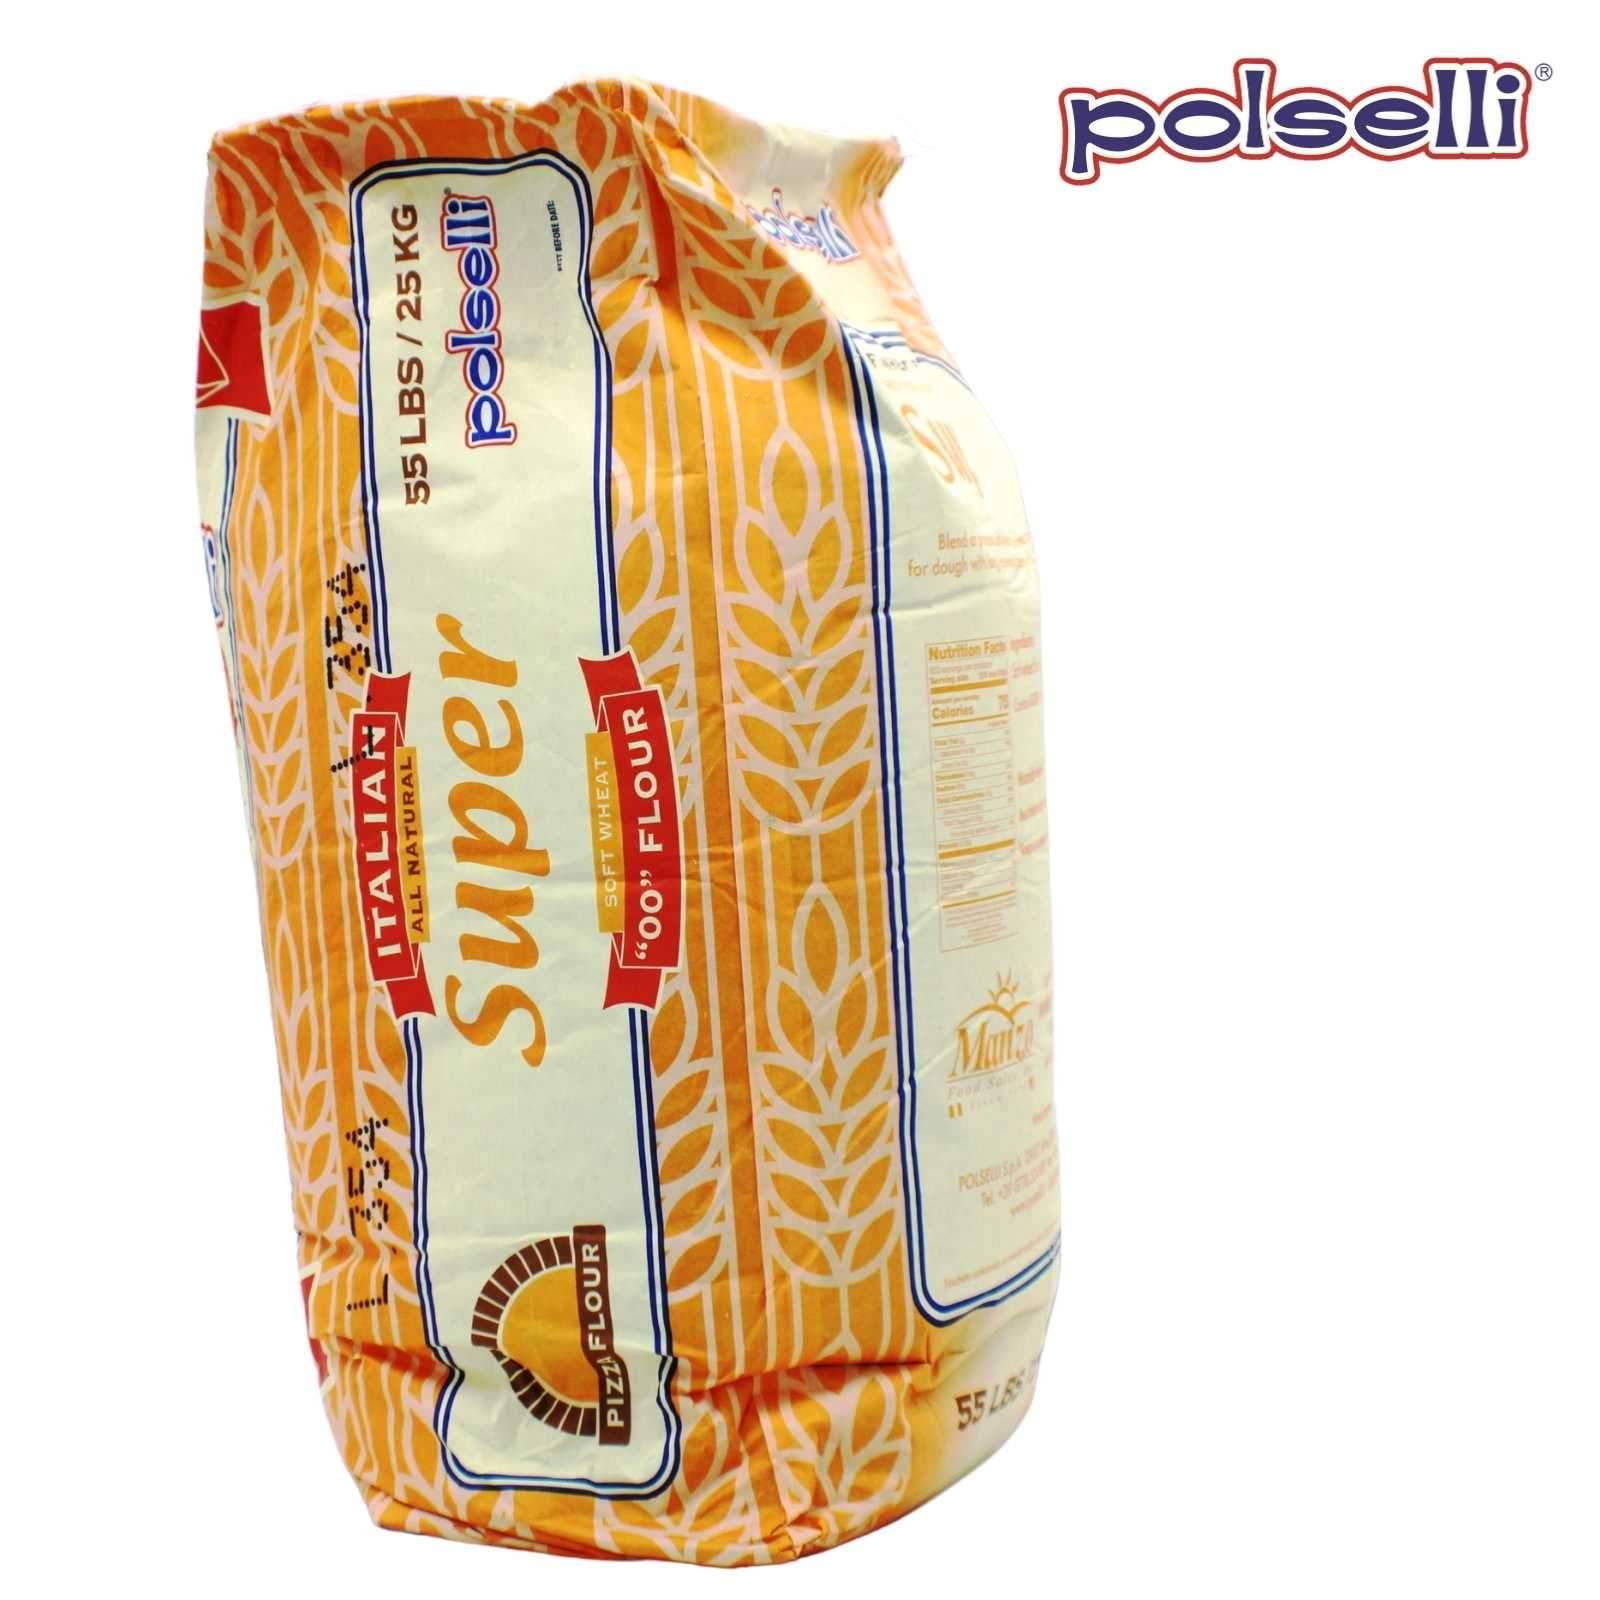 Polselli Super Pizza Flour 55lbs side